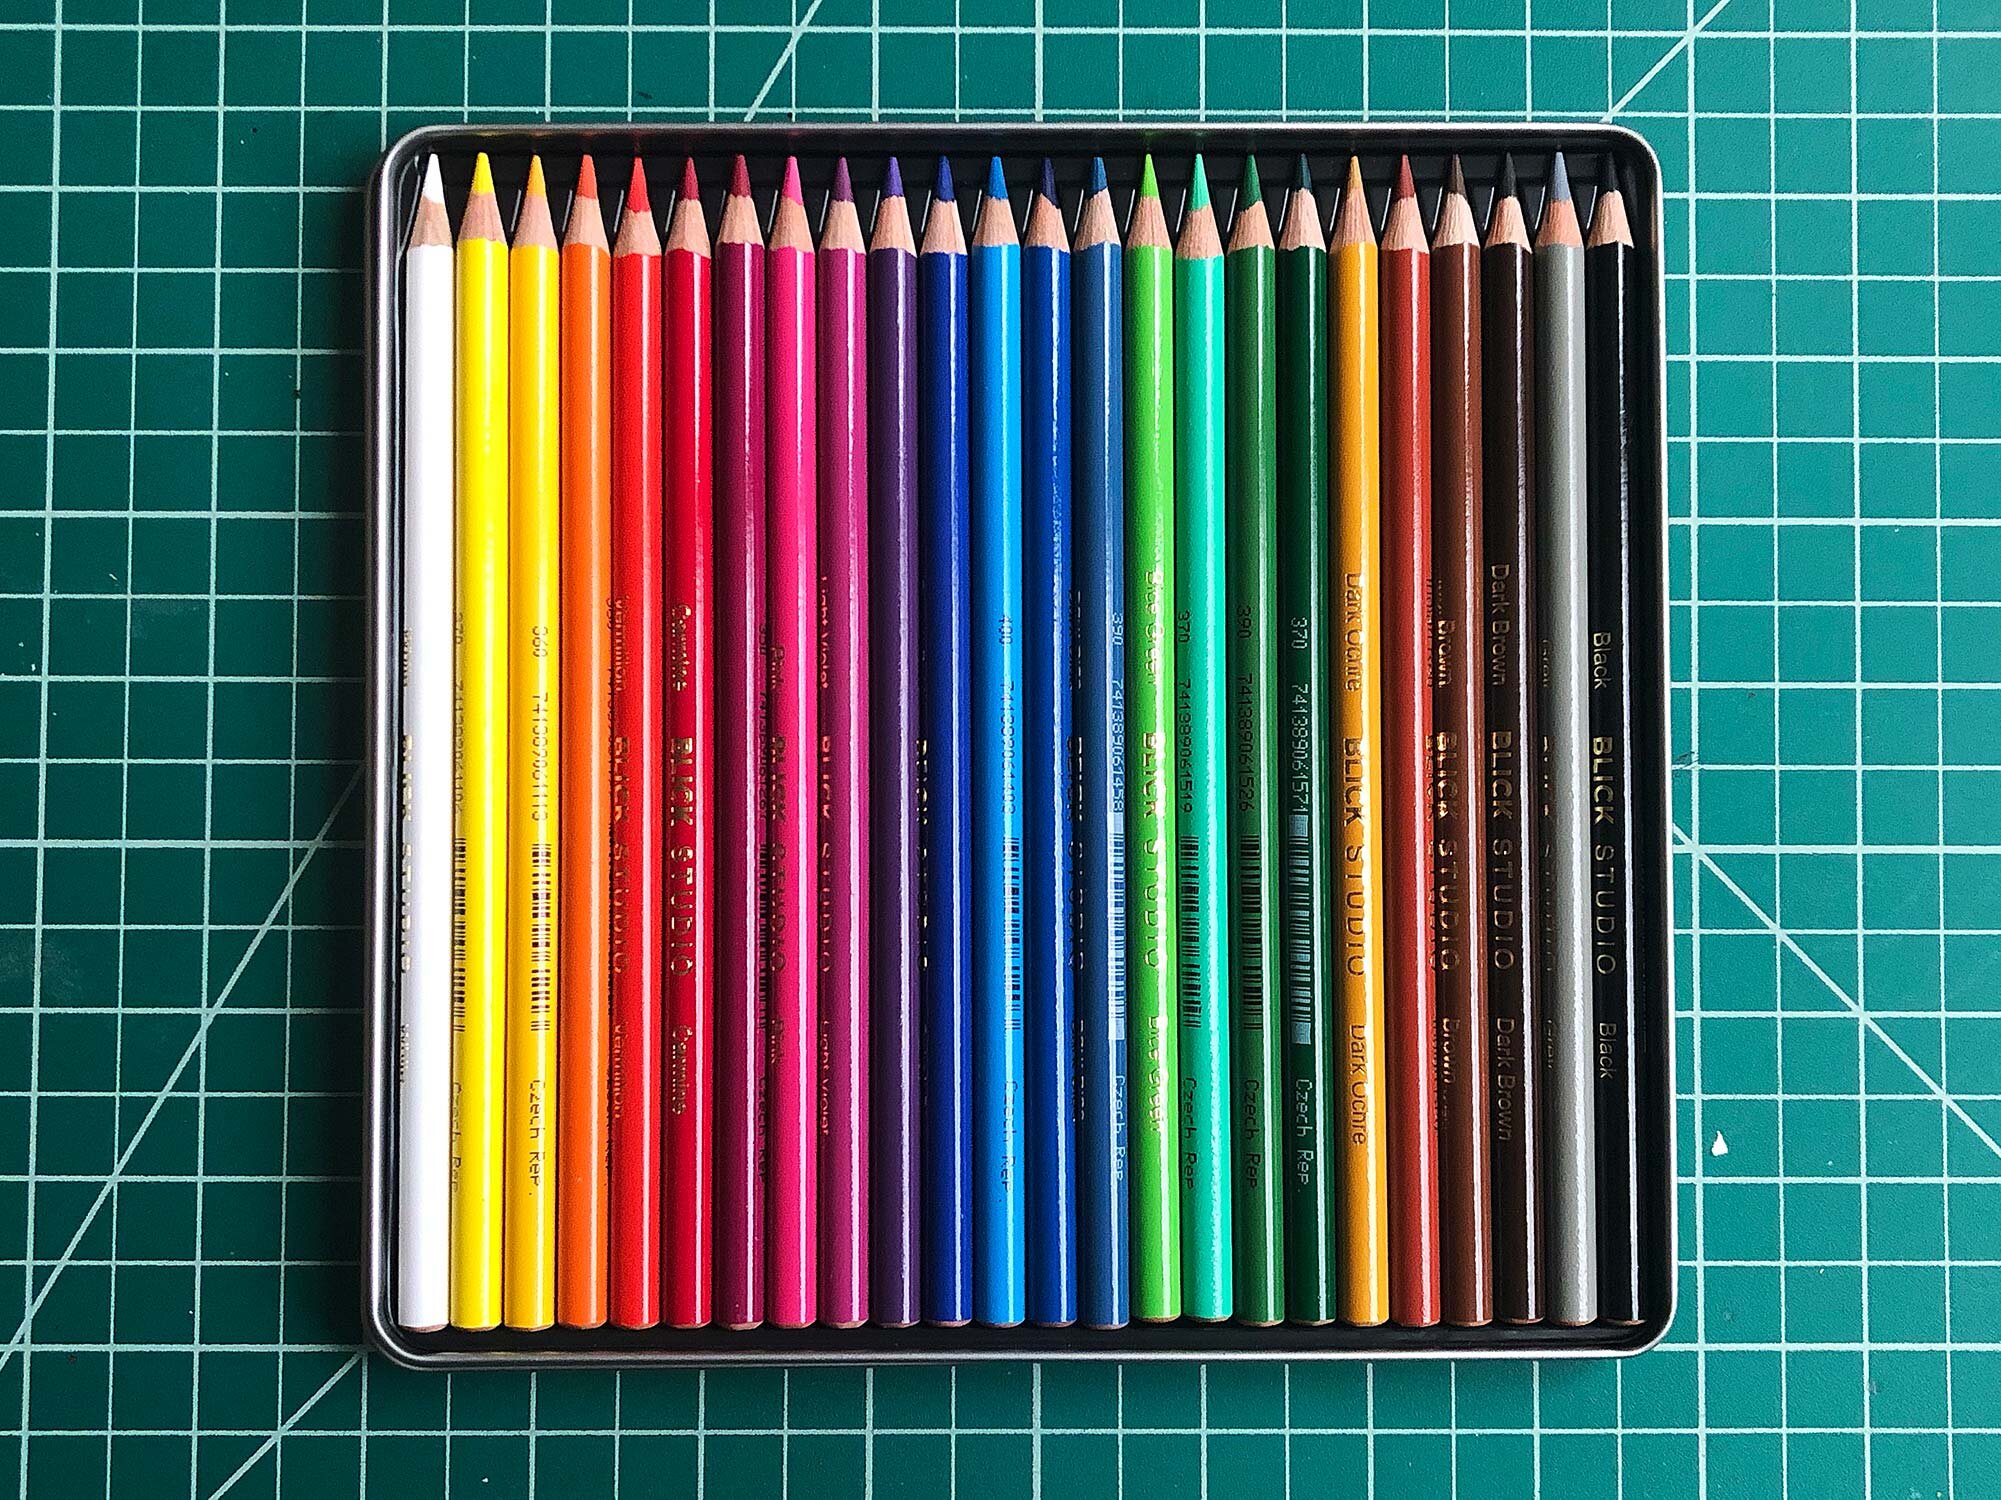 Blick Studio Artists' Colored Pencil Set - Set of 48, Assorted Colors